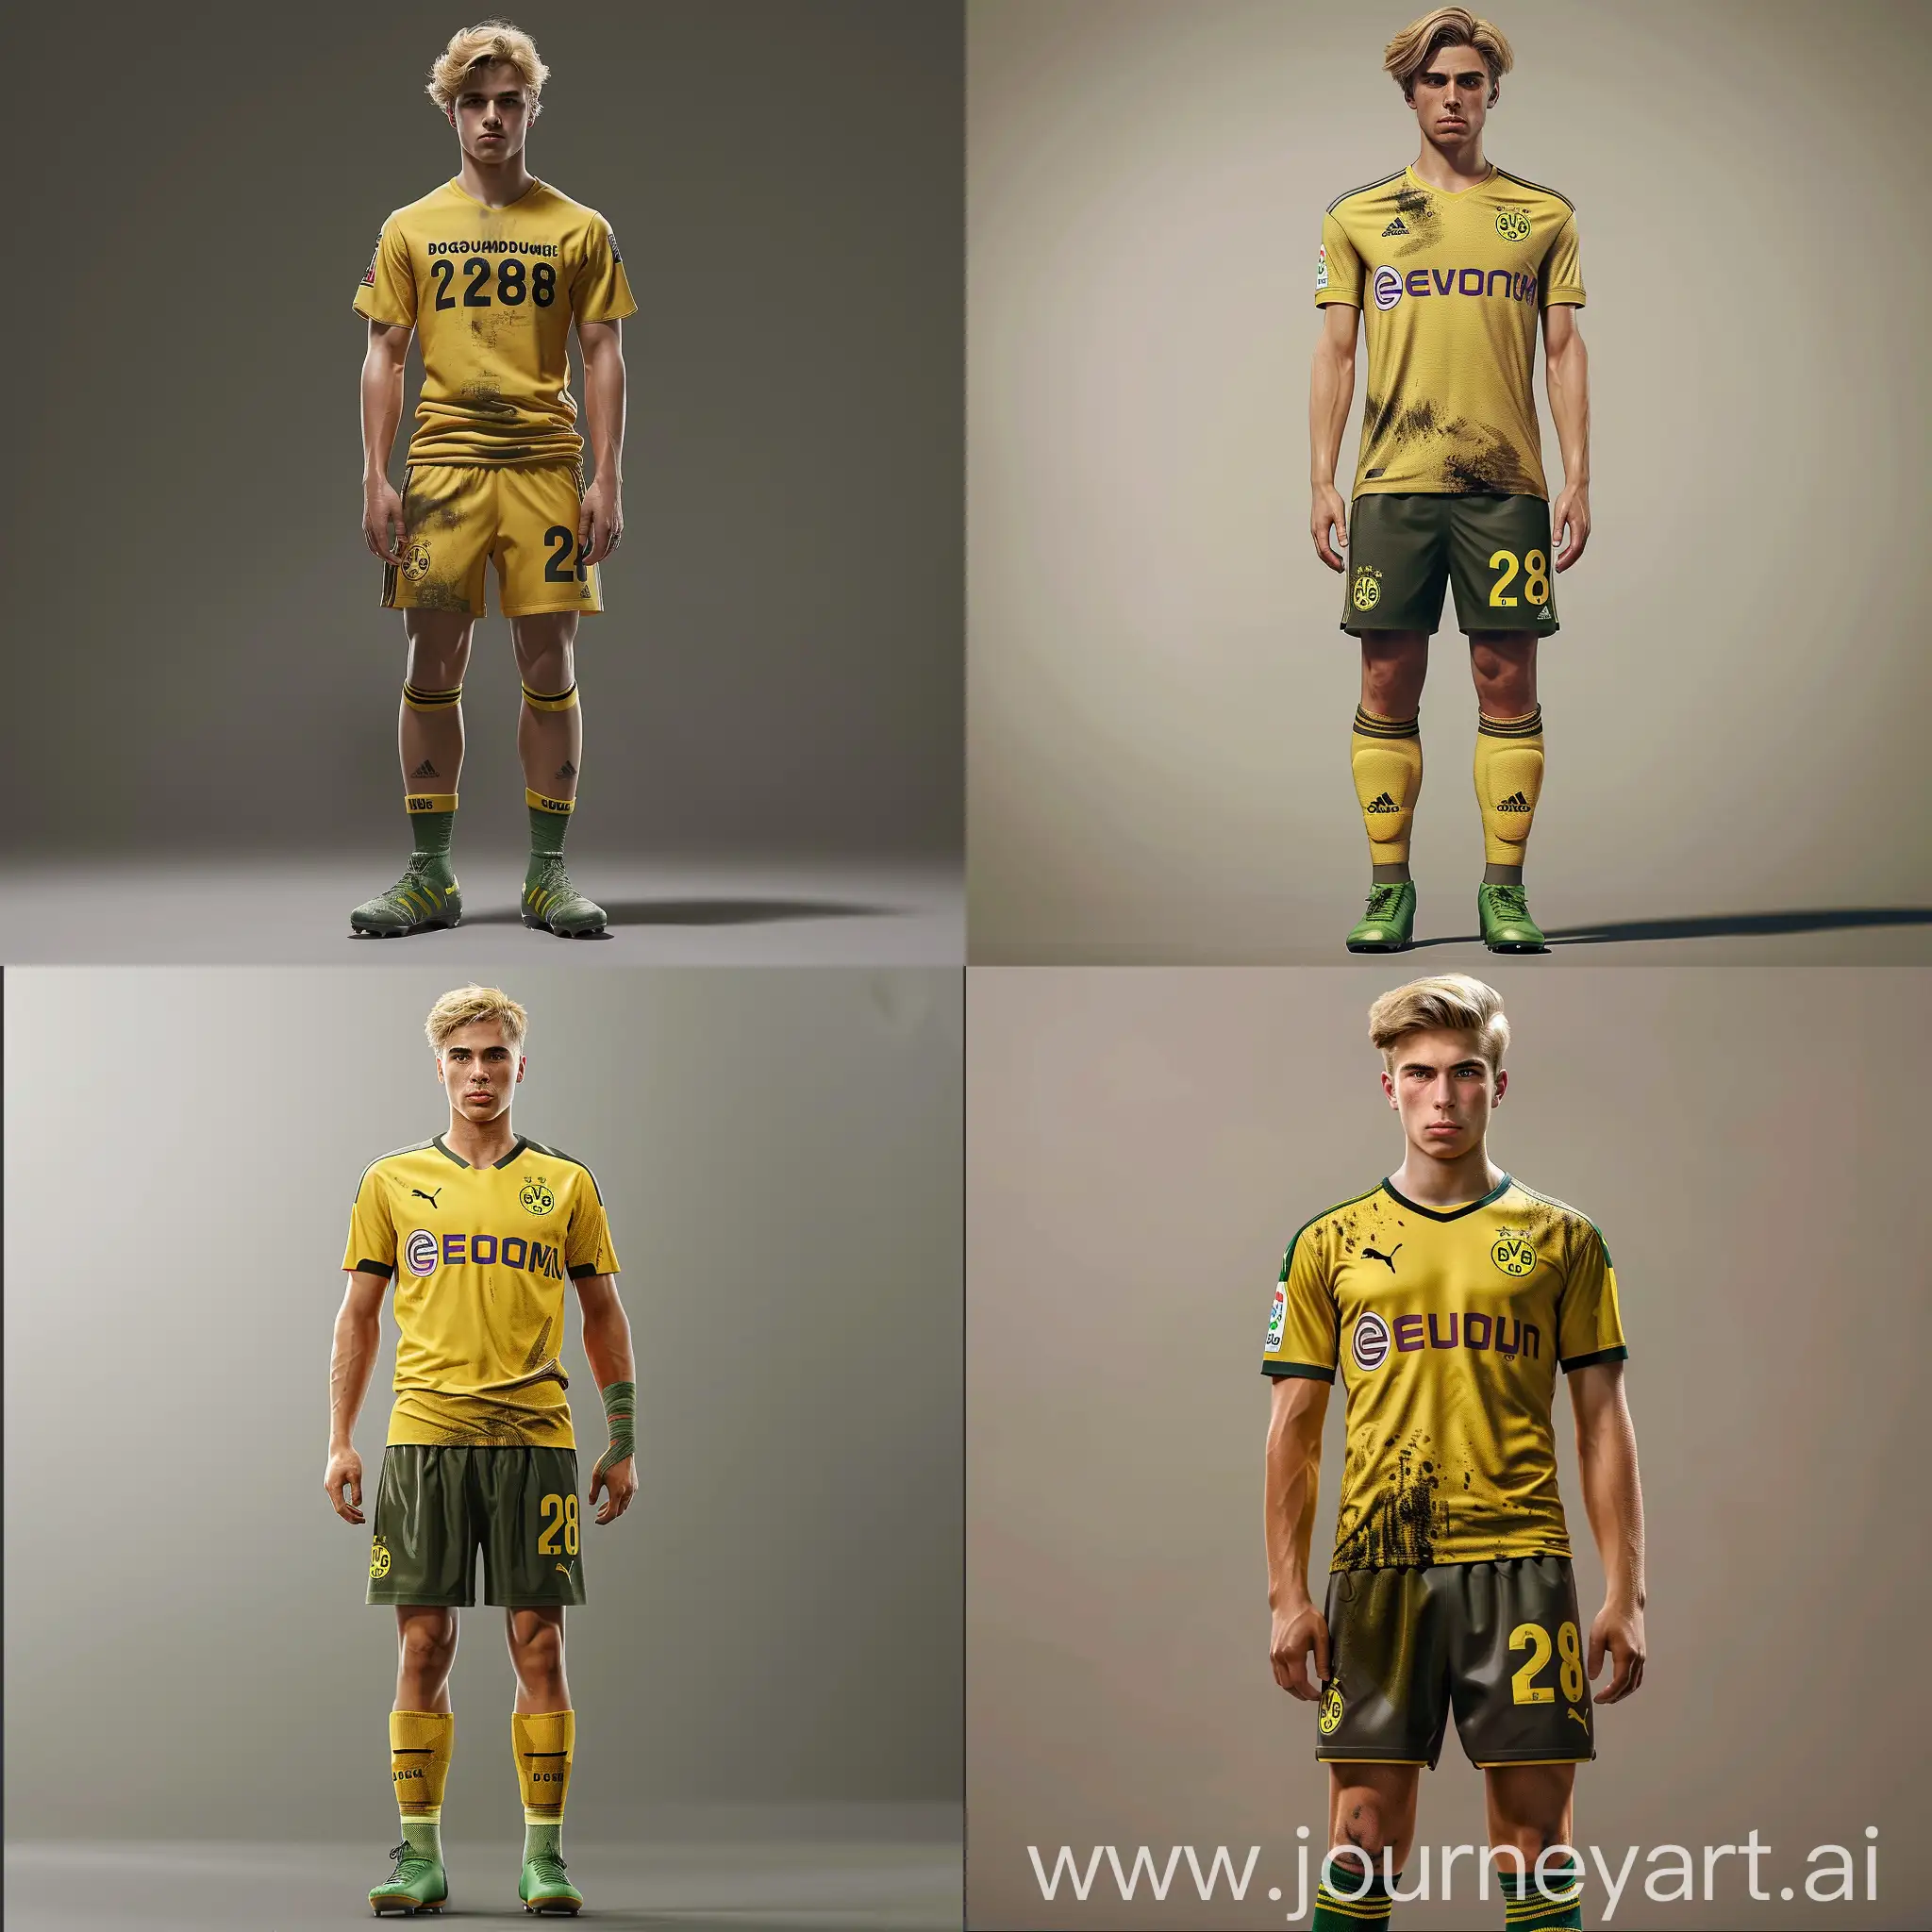 Charismatic-German-Teenager-in-Borussia-Dortmund-Attire